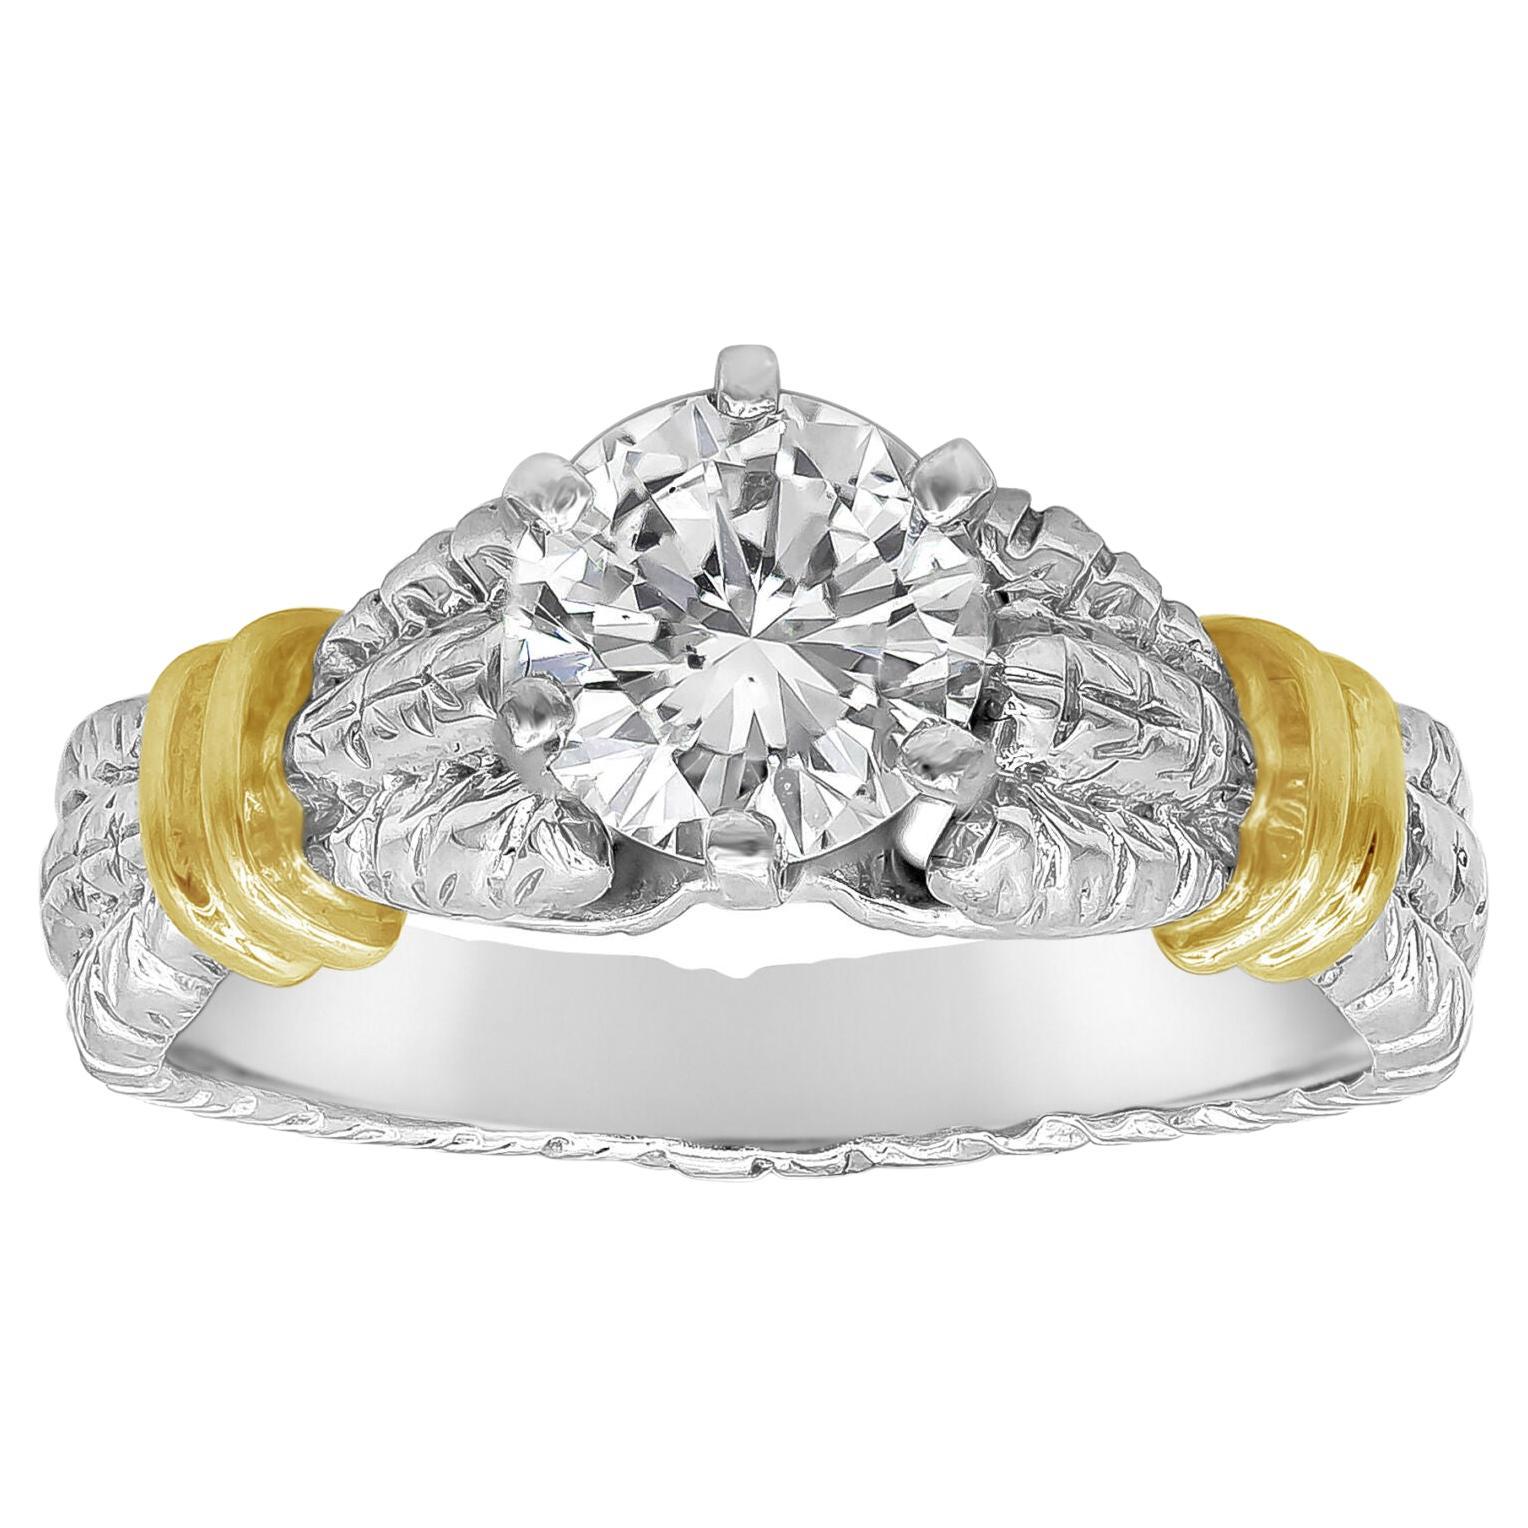 Roman Malakov 0.91 Carat Round Diamond Solitaire Engagement Ring